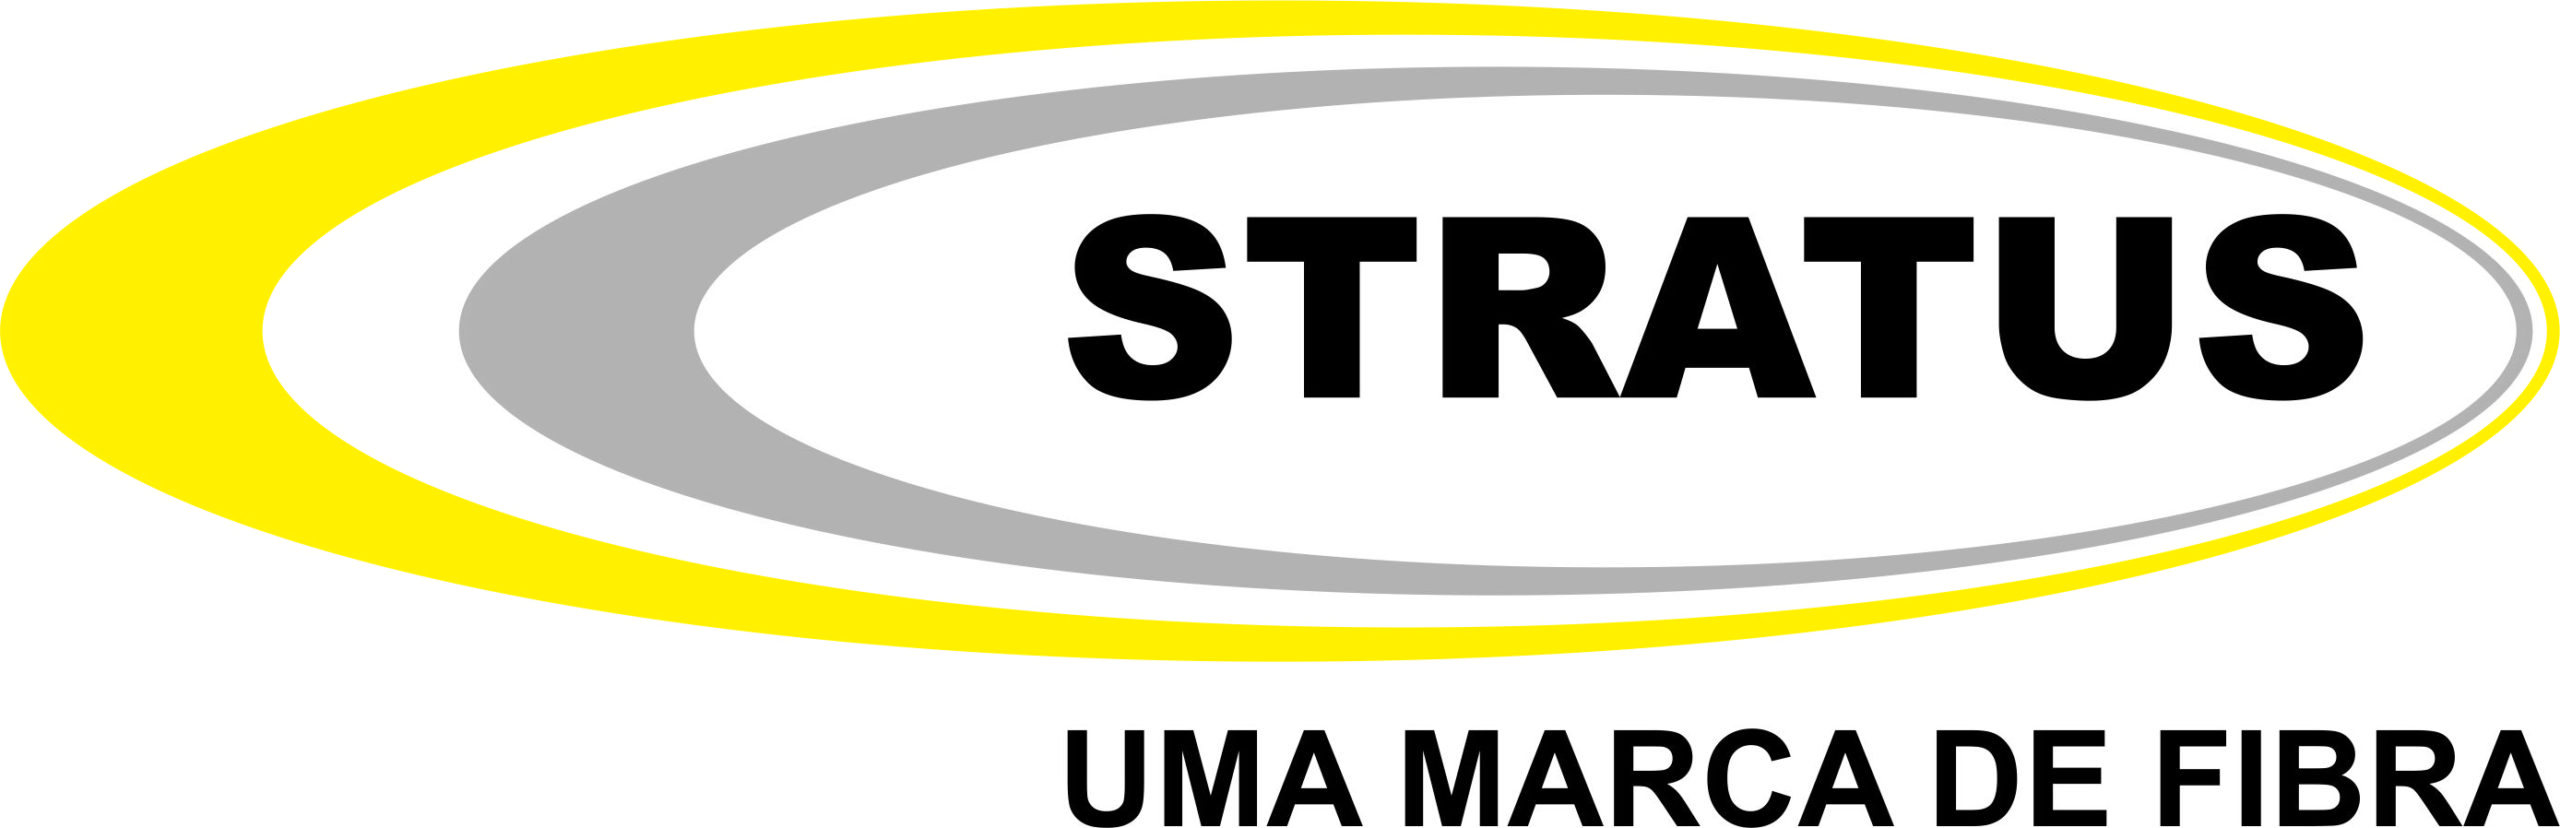 logo stratus (002)